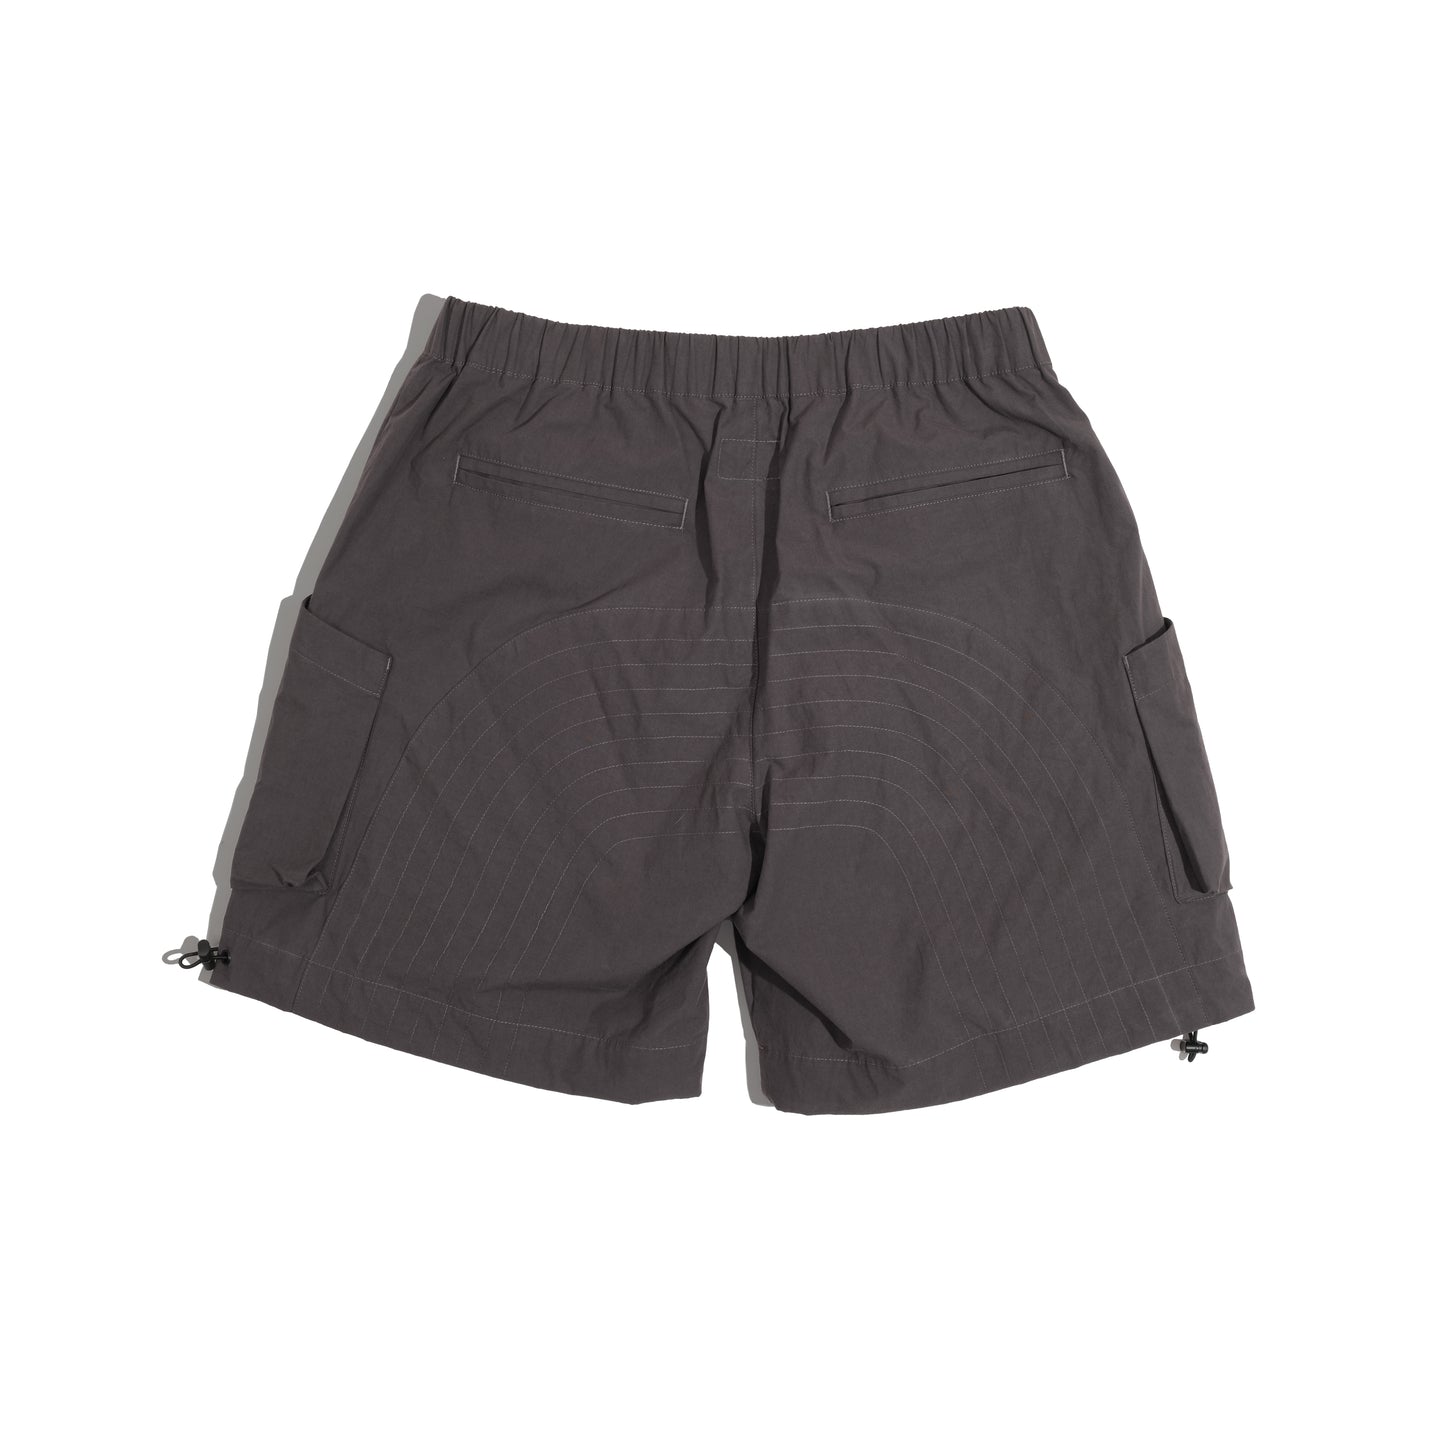 Camping Shorts / Cotton - Charcoal